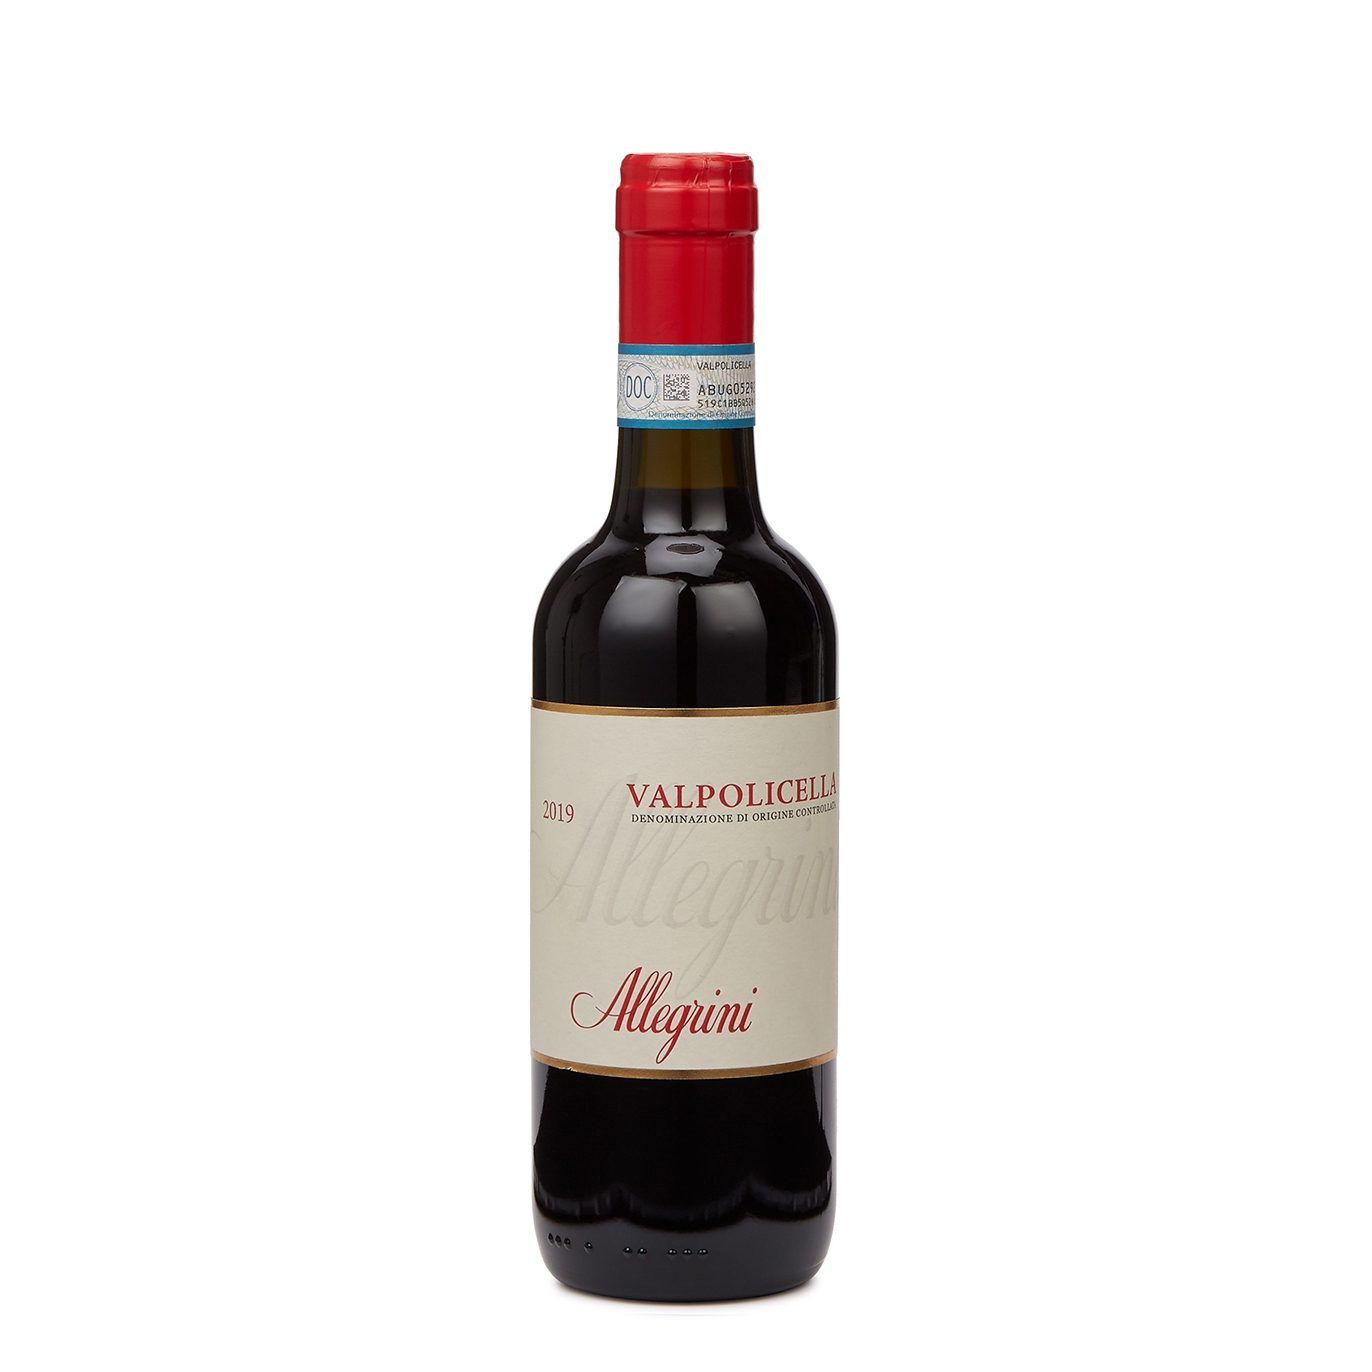 Allegrini Valpolicella 2019 Half Bottle 375ml Red Wine